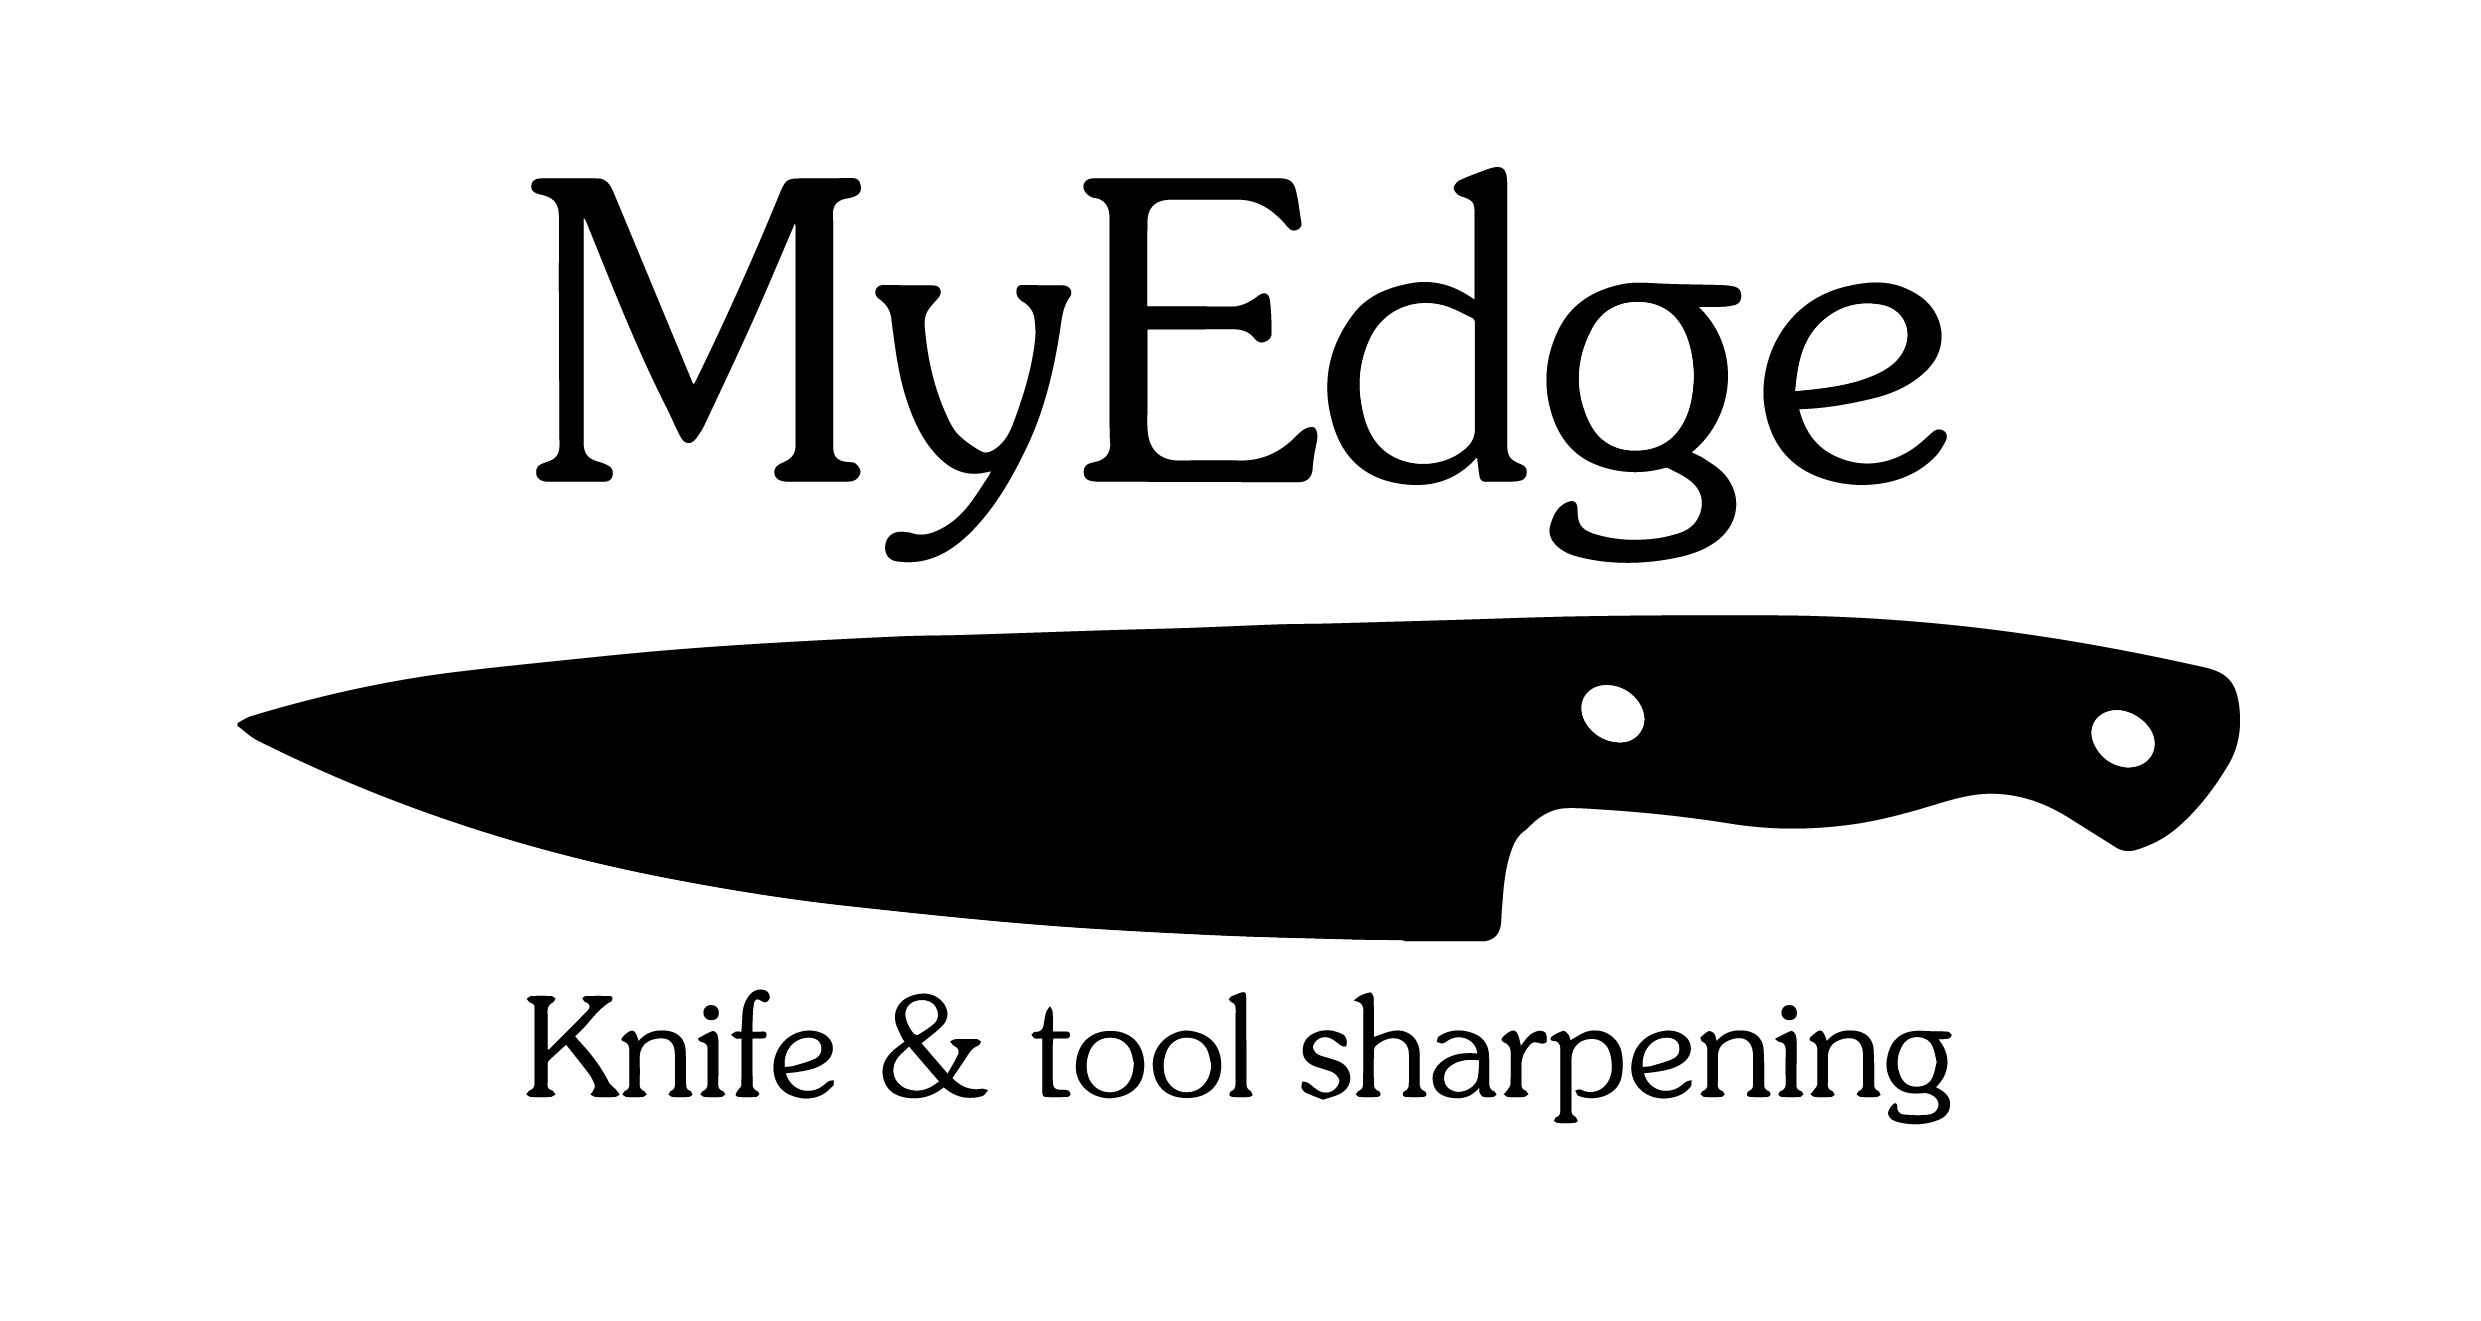 MyEdge logo